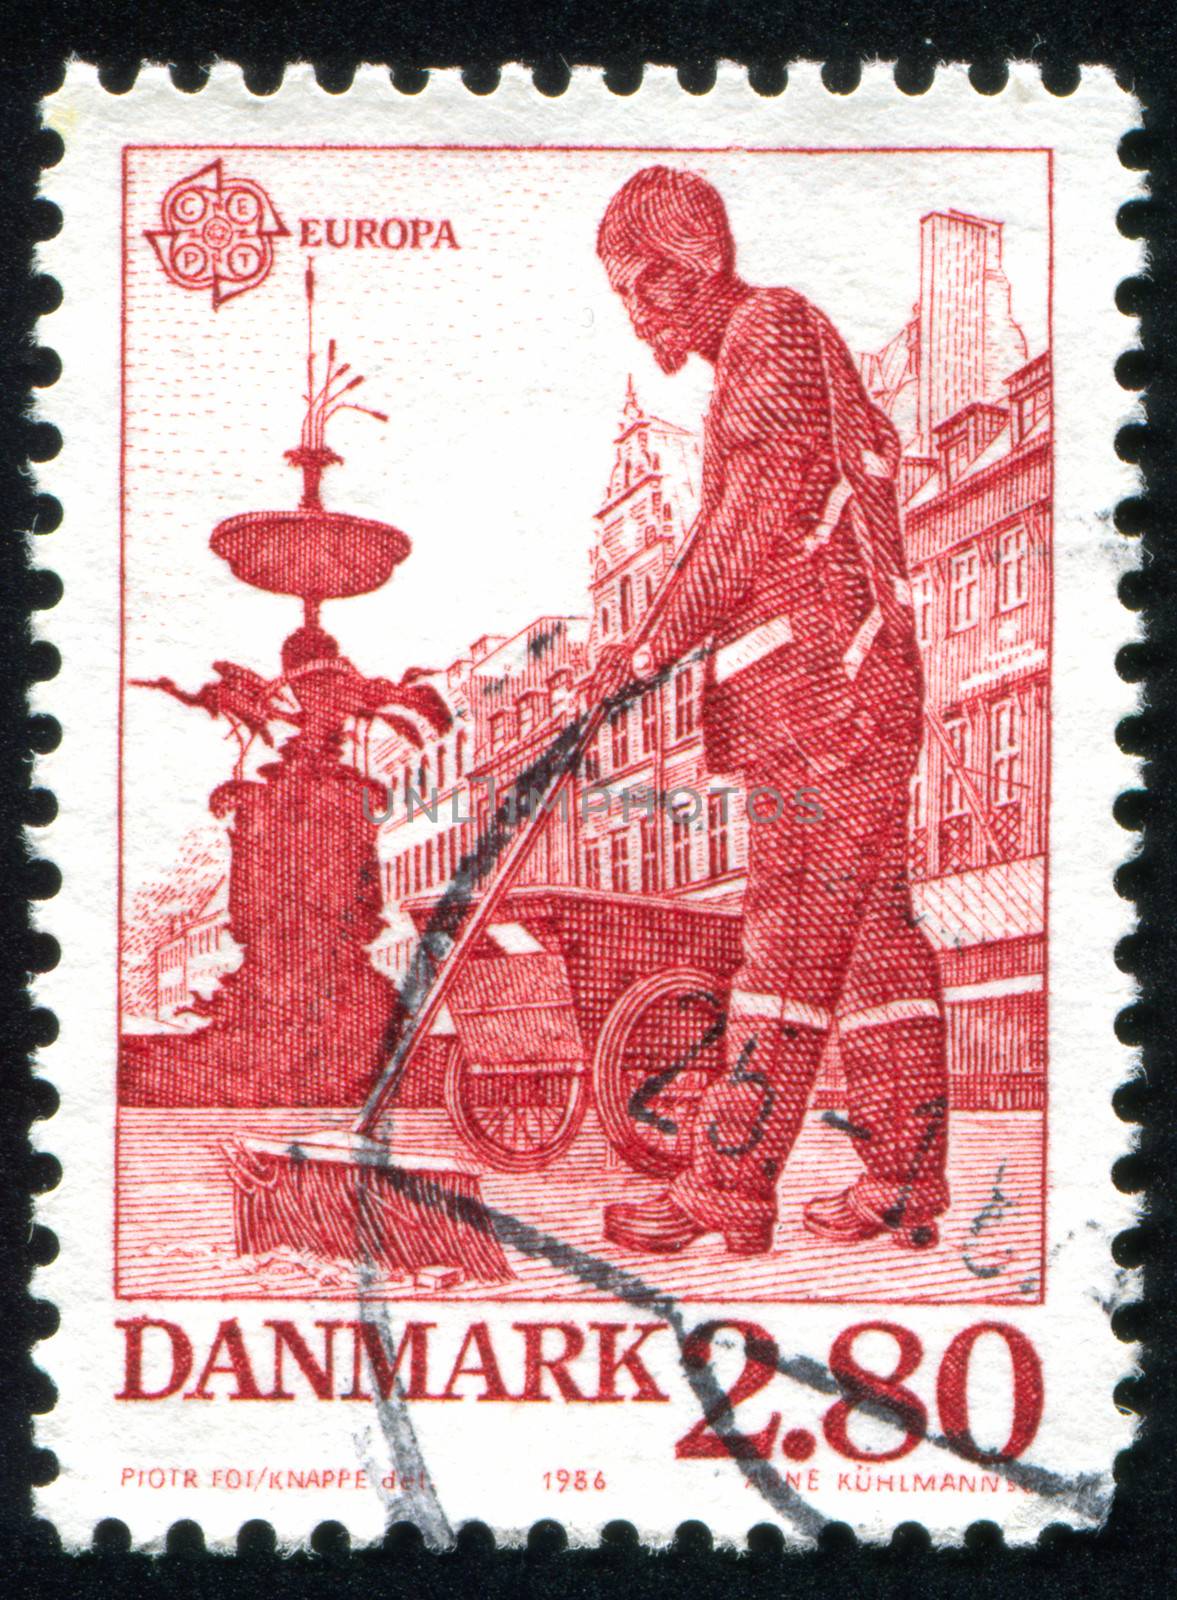 DENMARK - CIRCA 1986: stamp printed by Denmark, shows Street sweeper, circa 1986